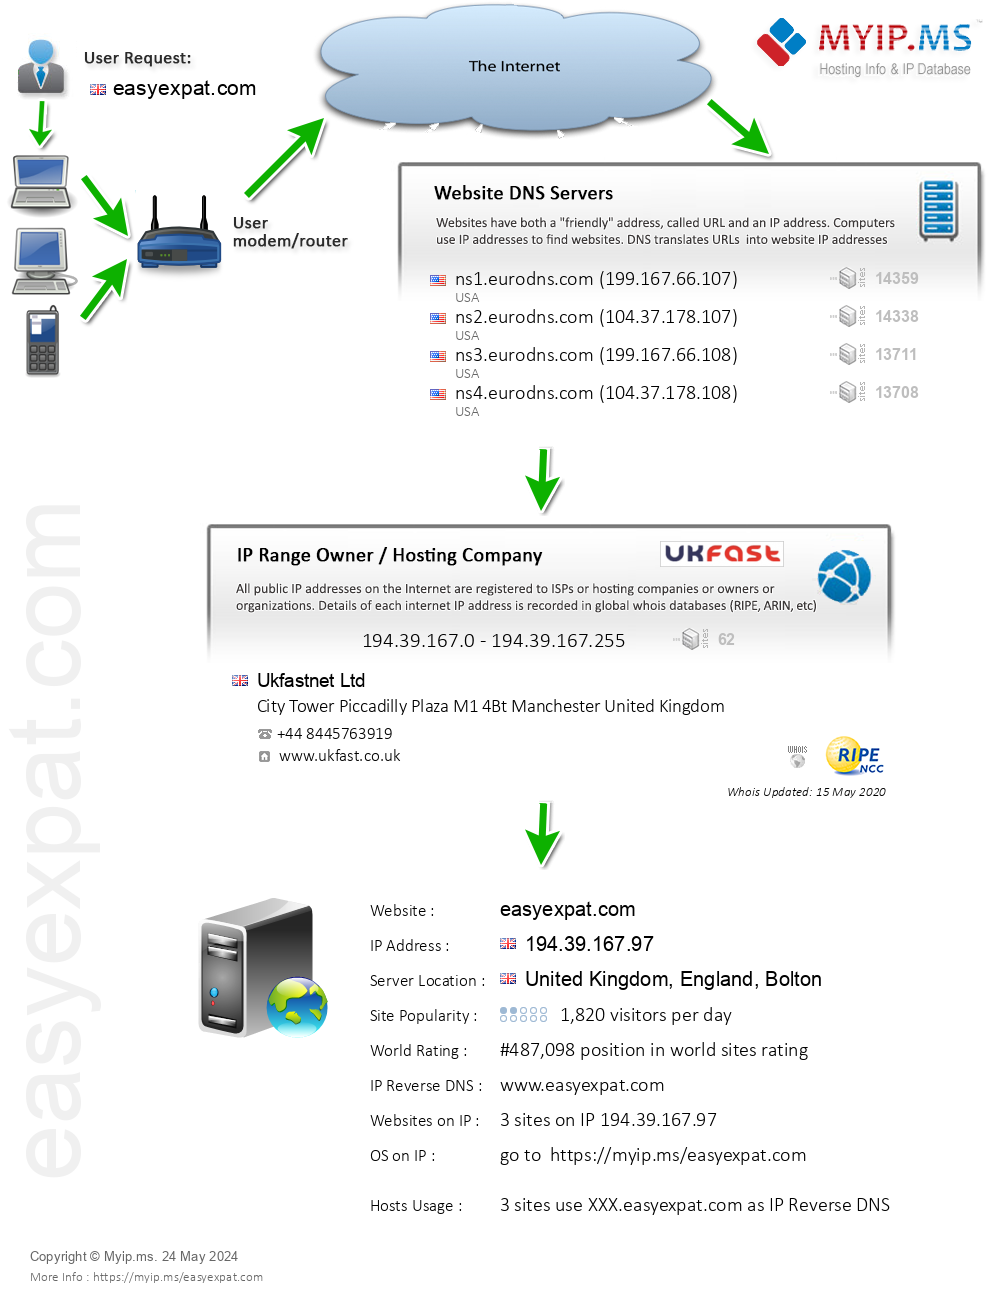 Easyexpat.com - Website Hosting Visual IP Diagram